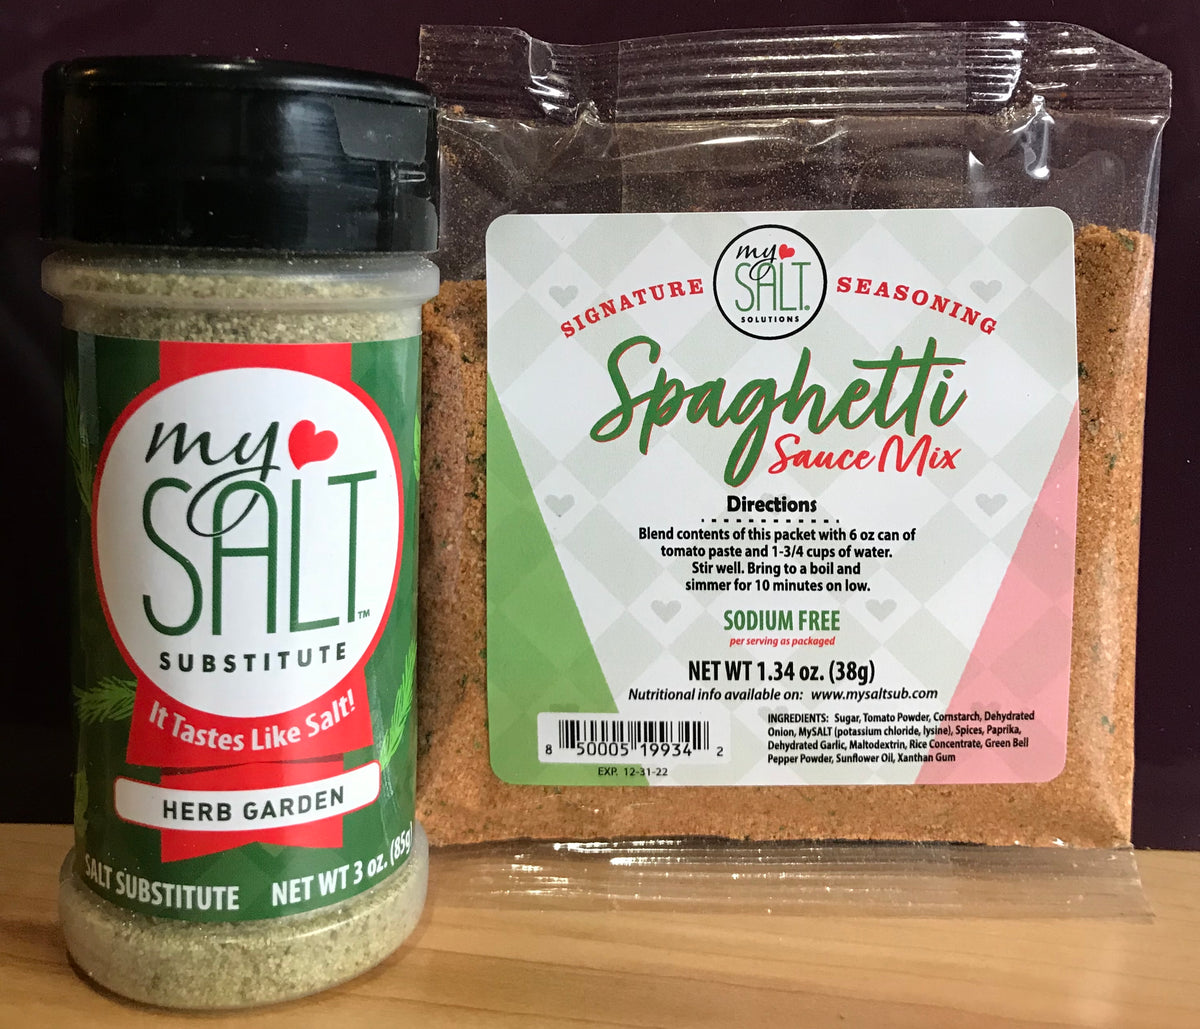 Spaghetti Sauce mix and Herb Garden – My Salt Substitute